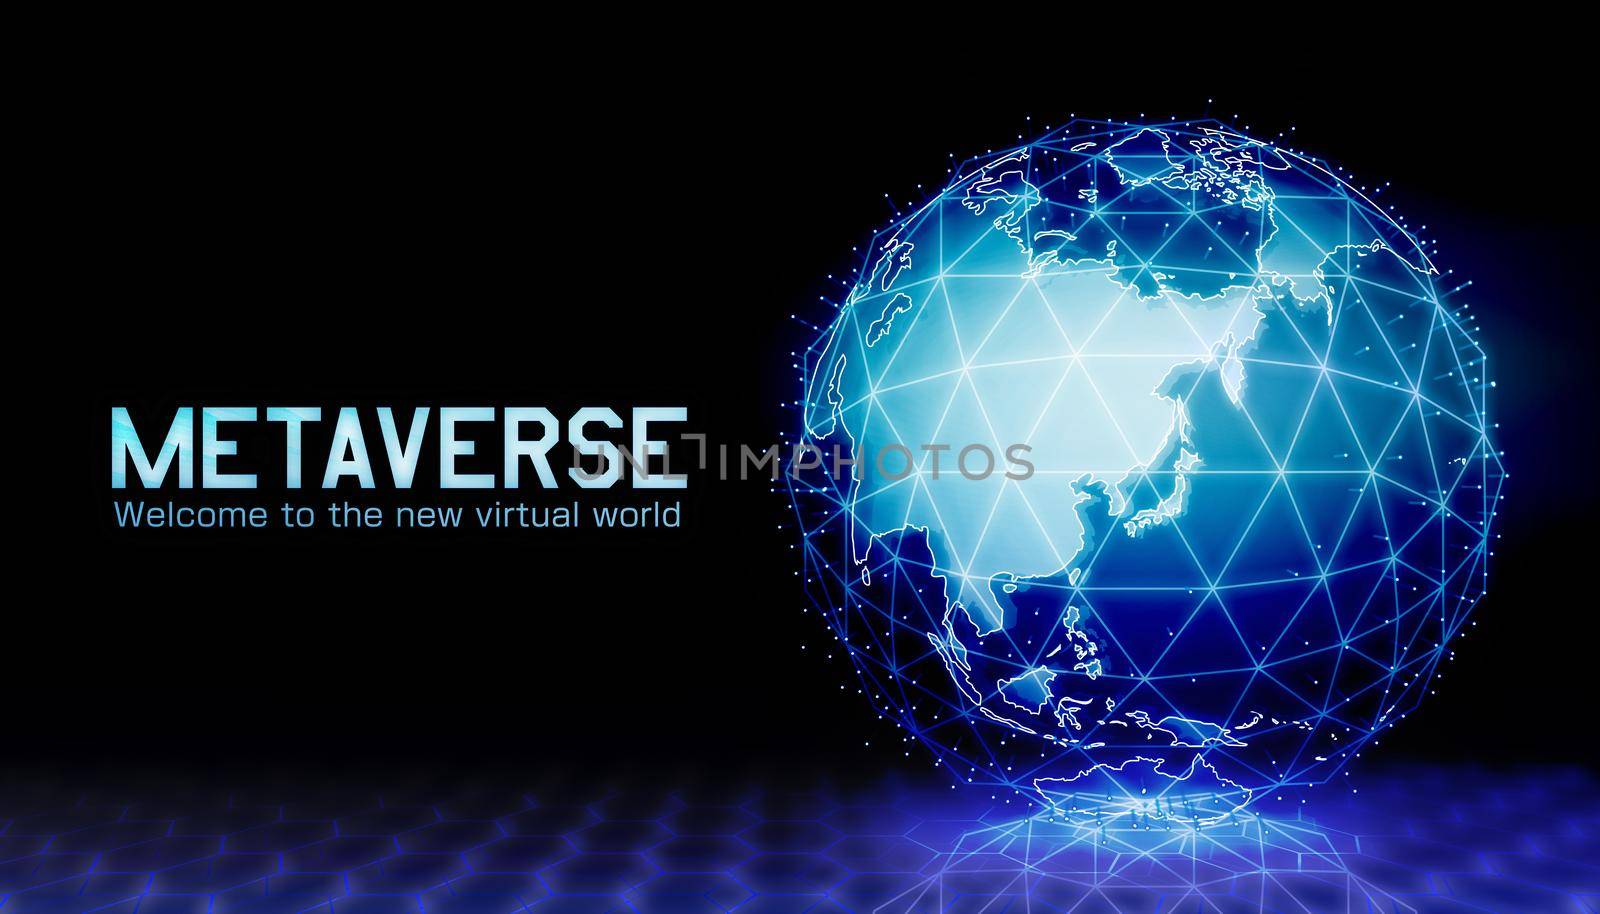 Metaverse motif web banner illustration by barks